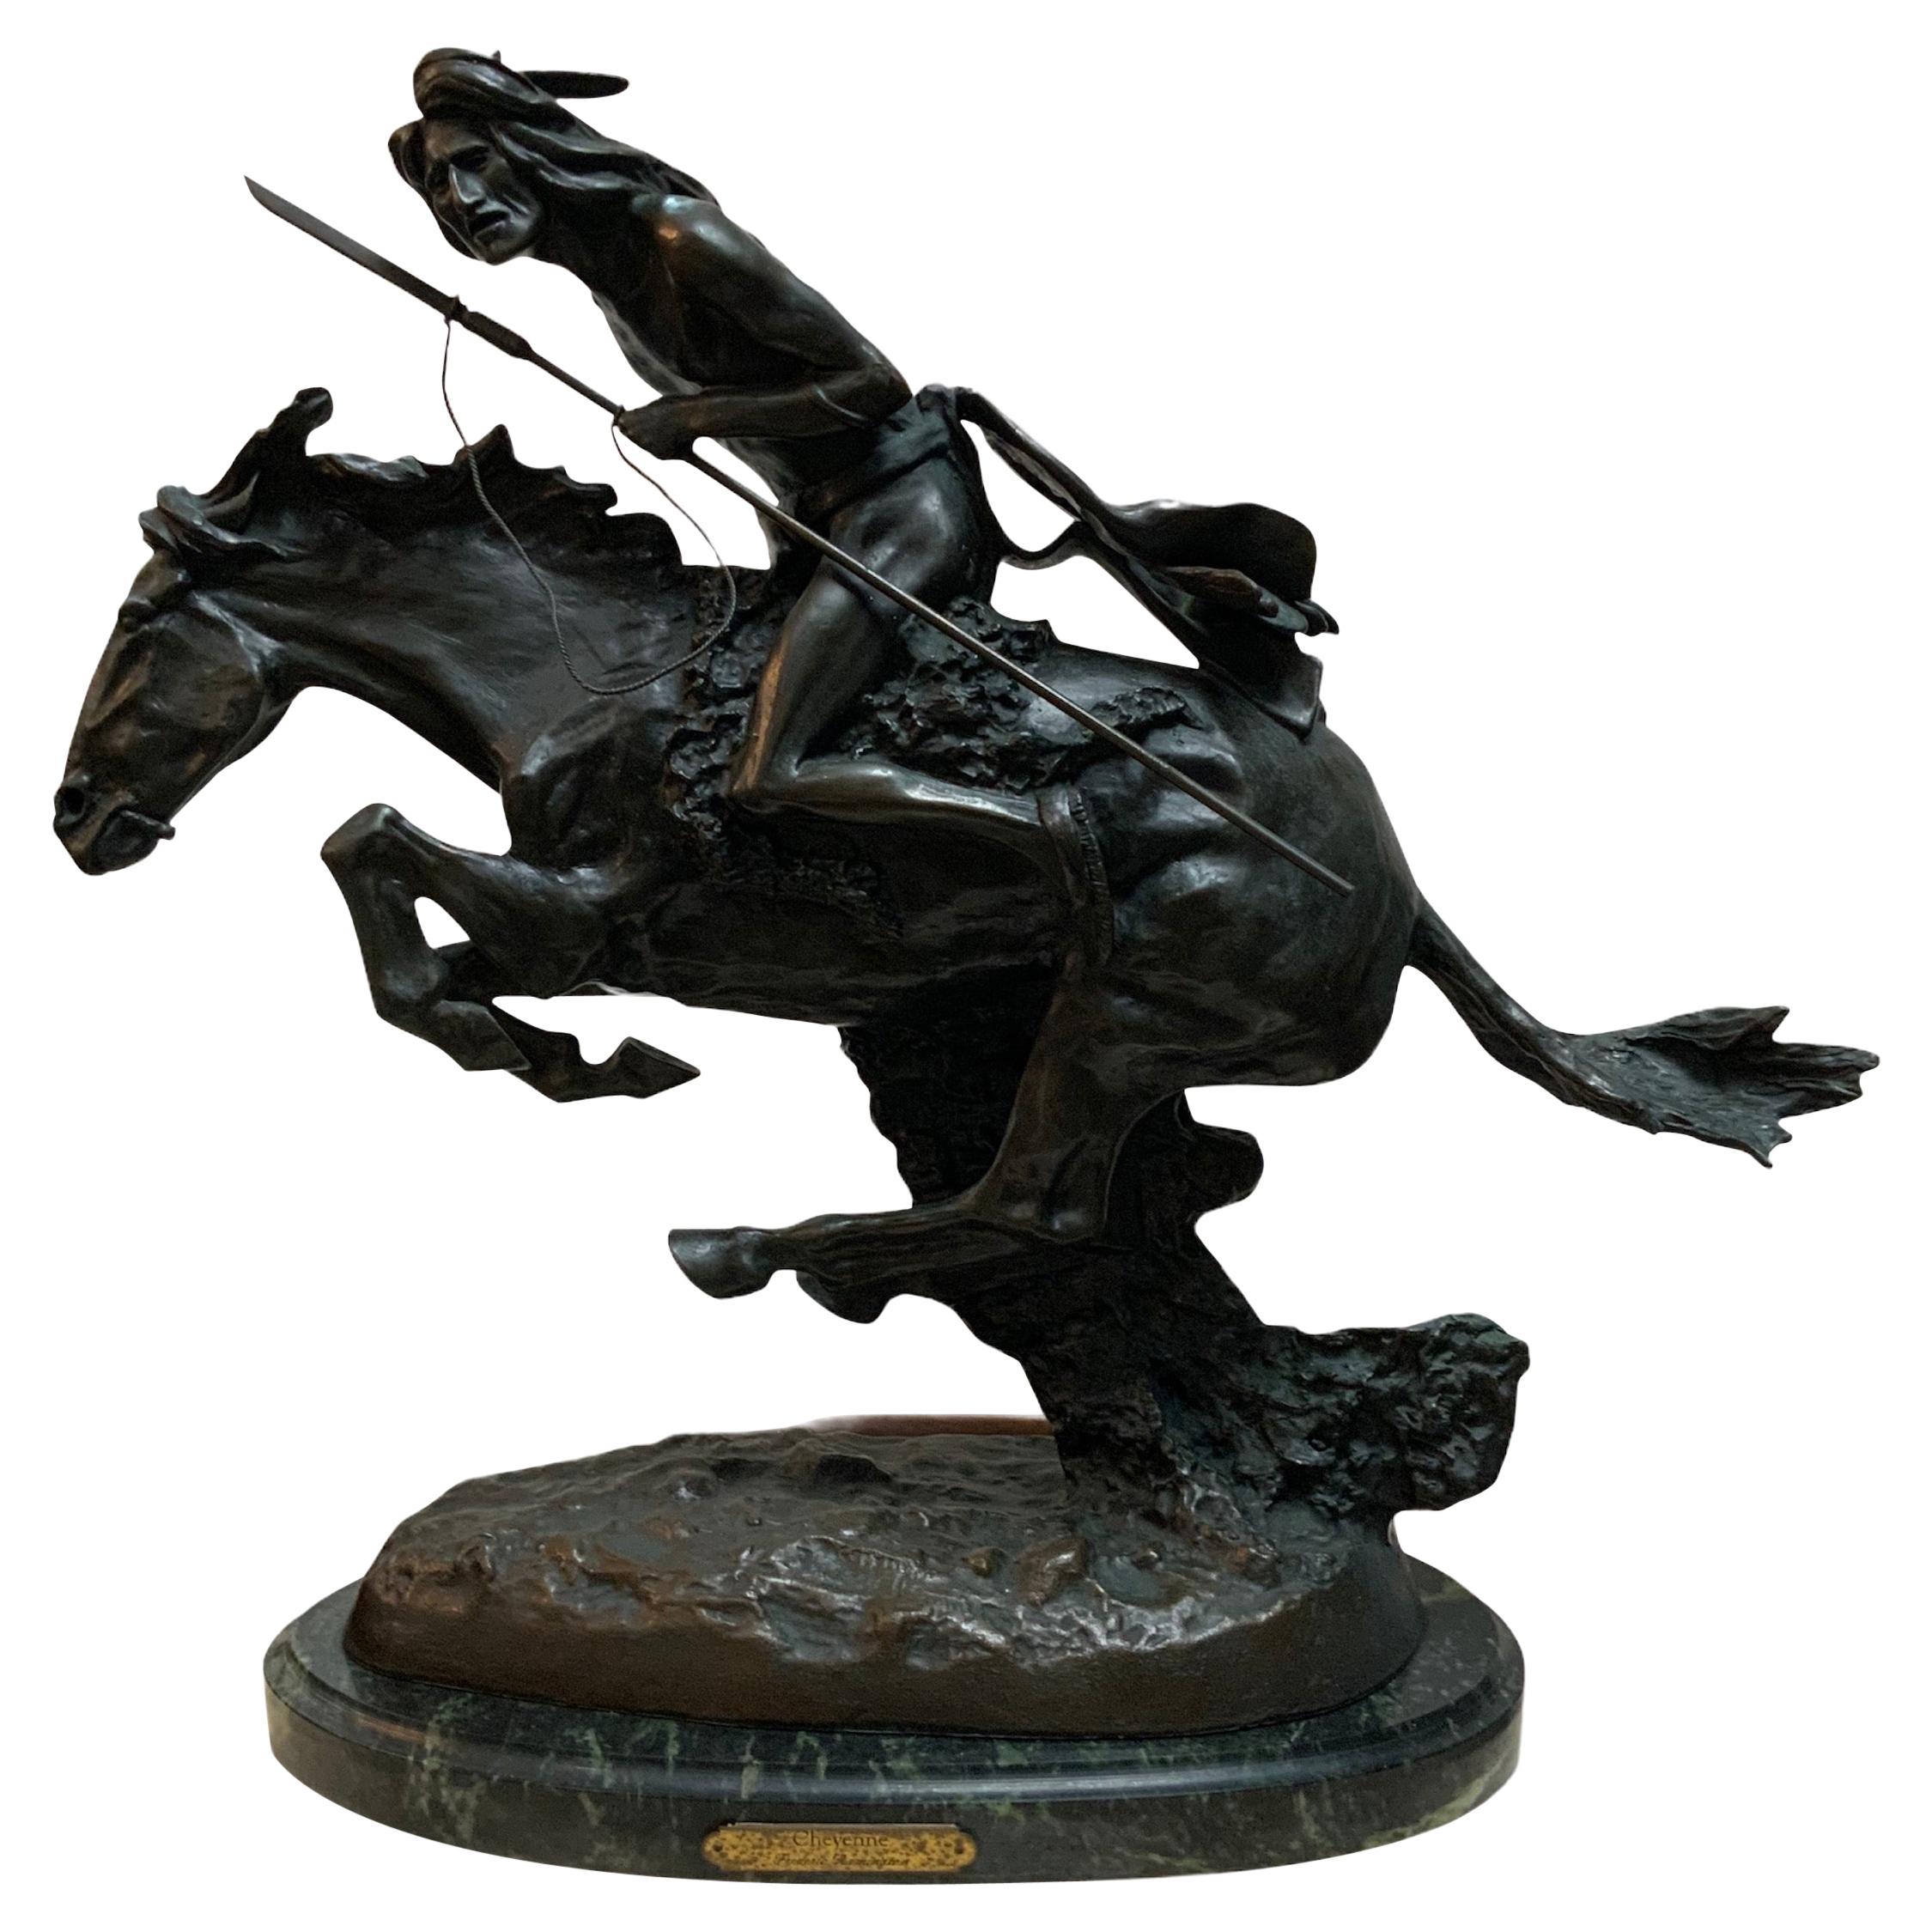 Cheyenne Bronze Sculpture by Frederic Remington